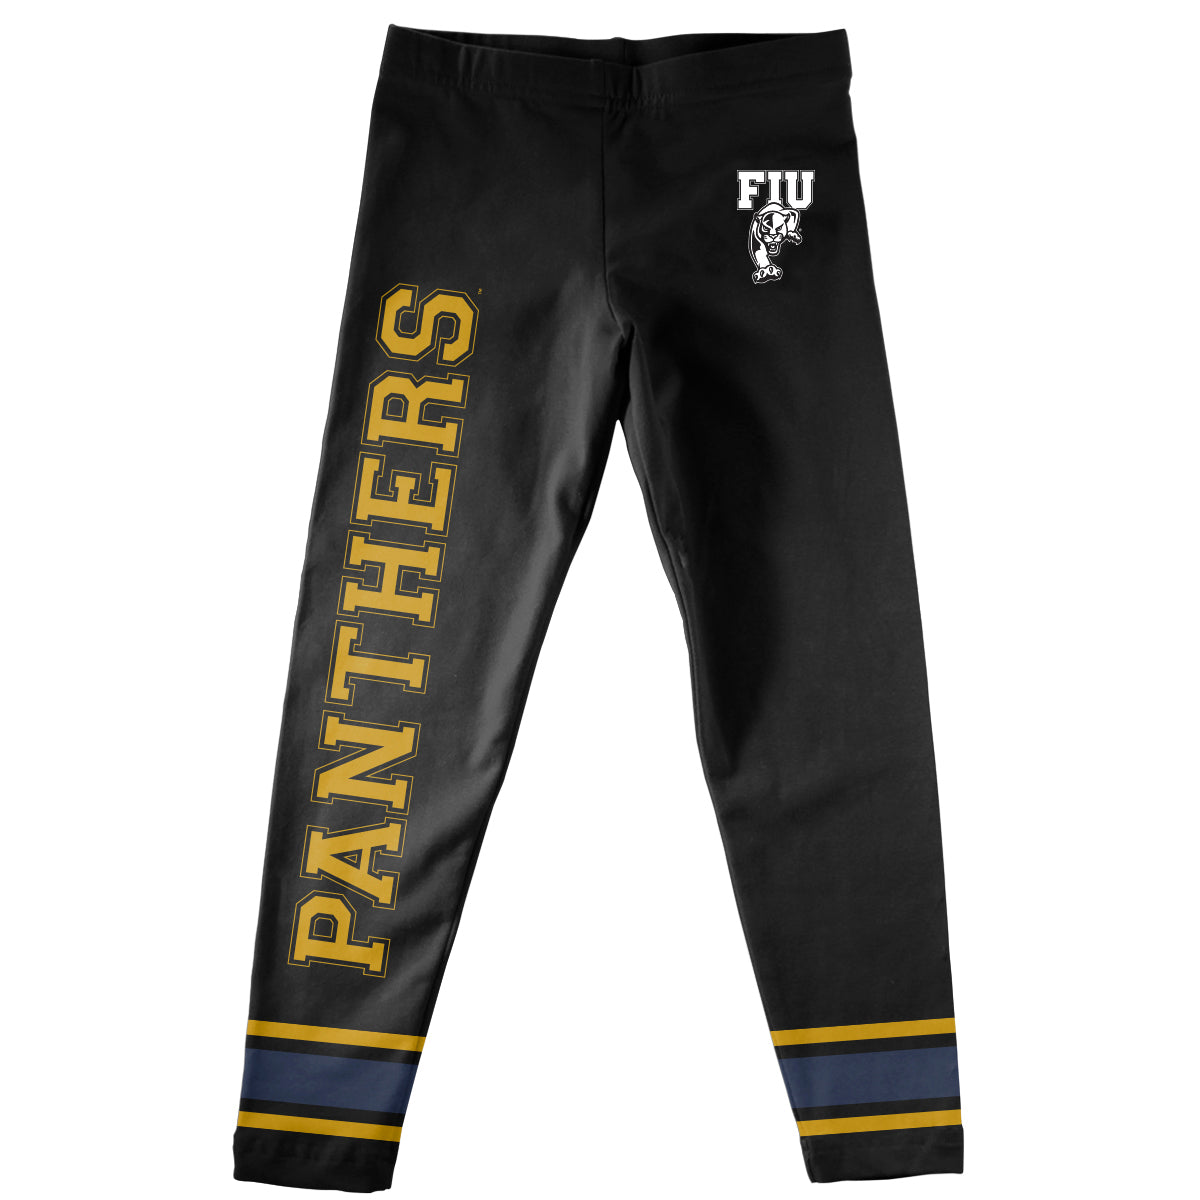 FIU Panthers Verbiage And Logo Black Stripes Leggings